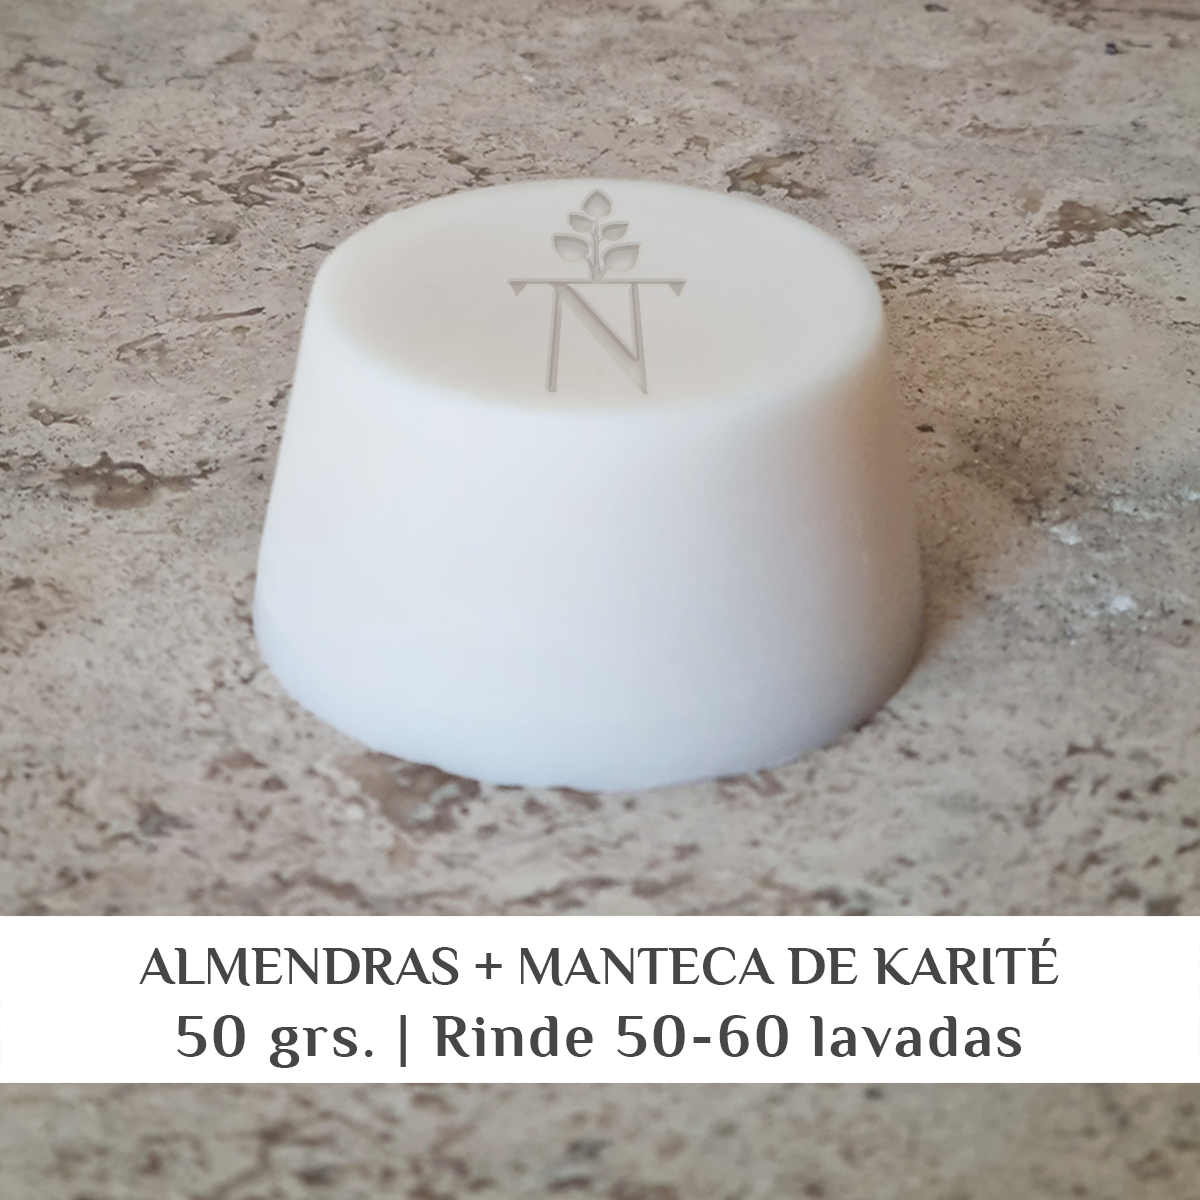 Acondicionador Sólido de Aceite de Almendras + Manteca de Karité.